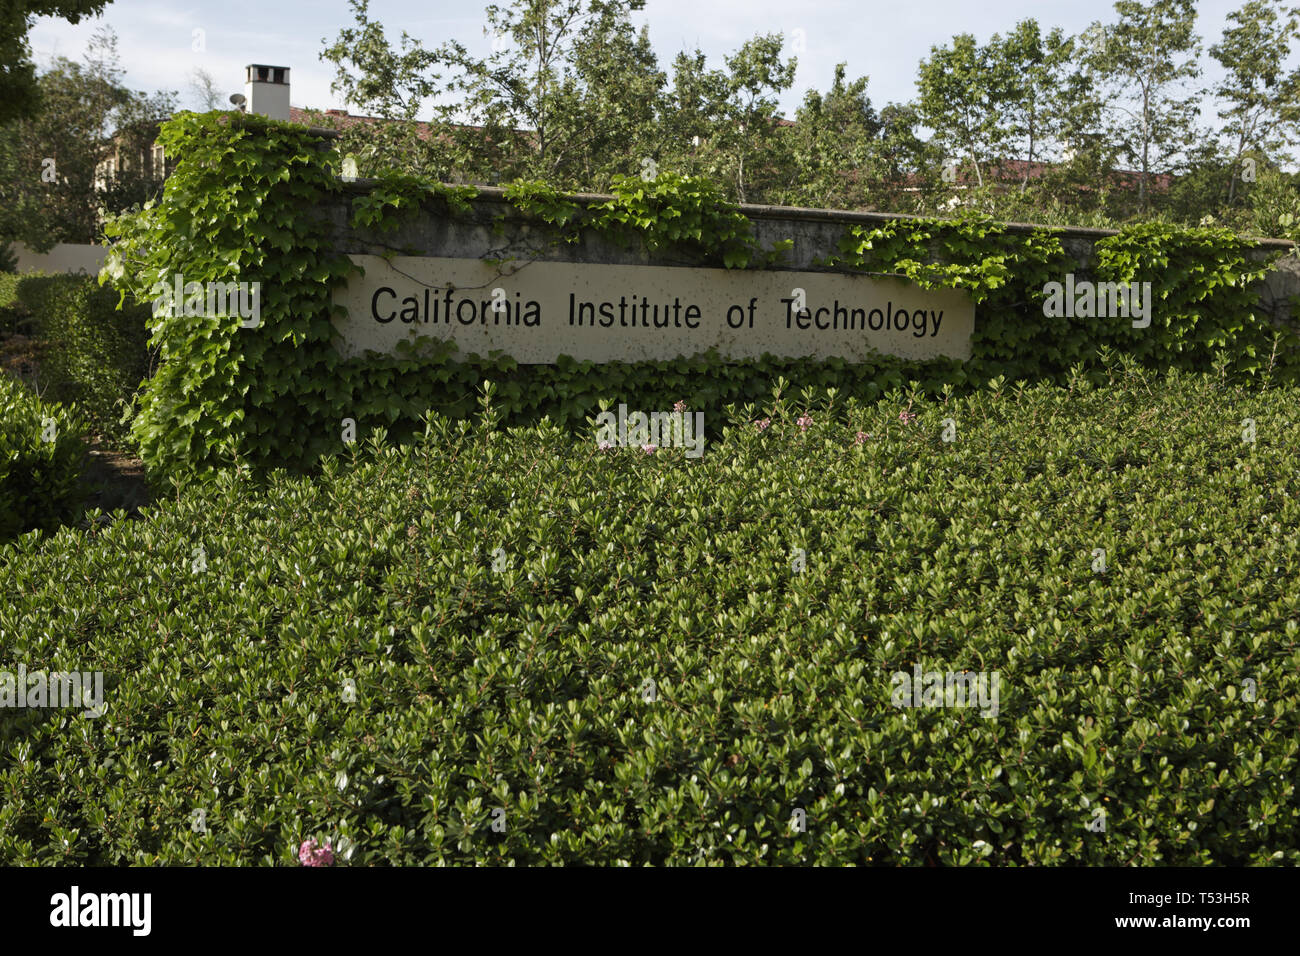 Caltech signer sur le campus, California, USA Banque D'Images